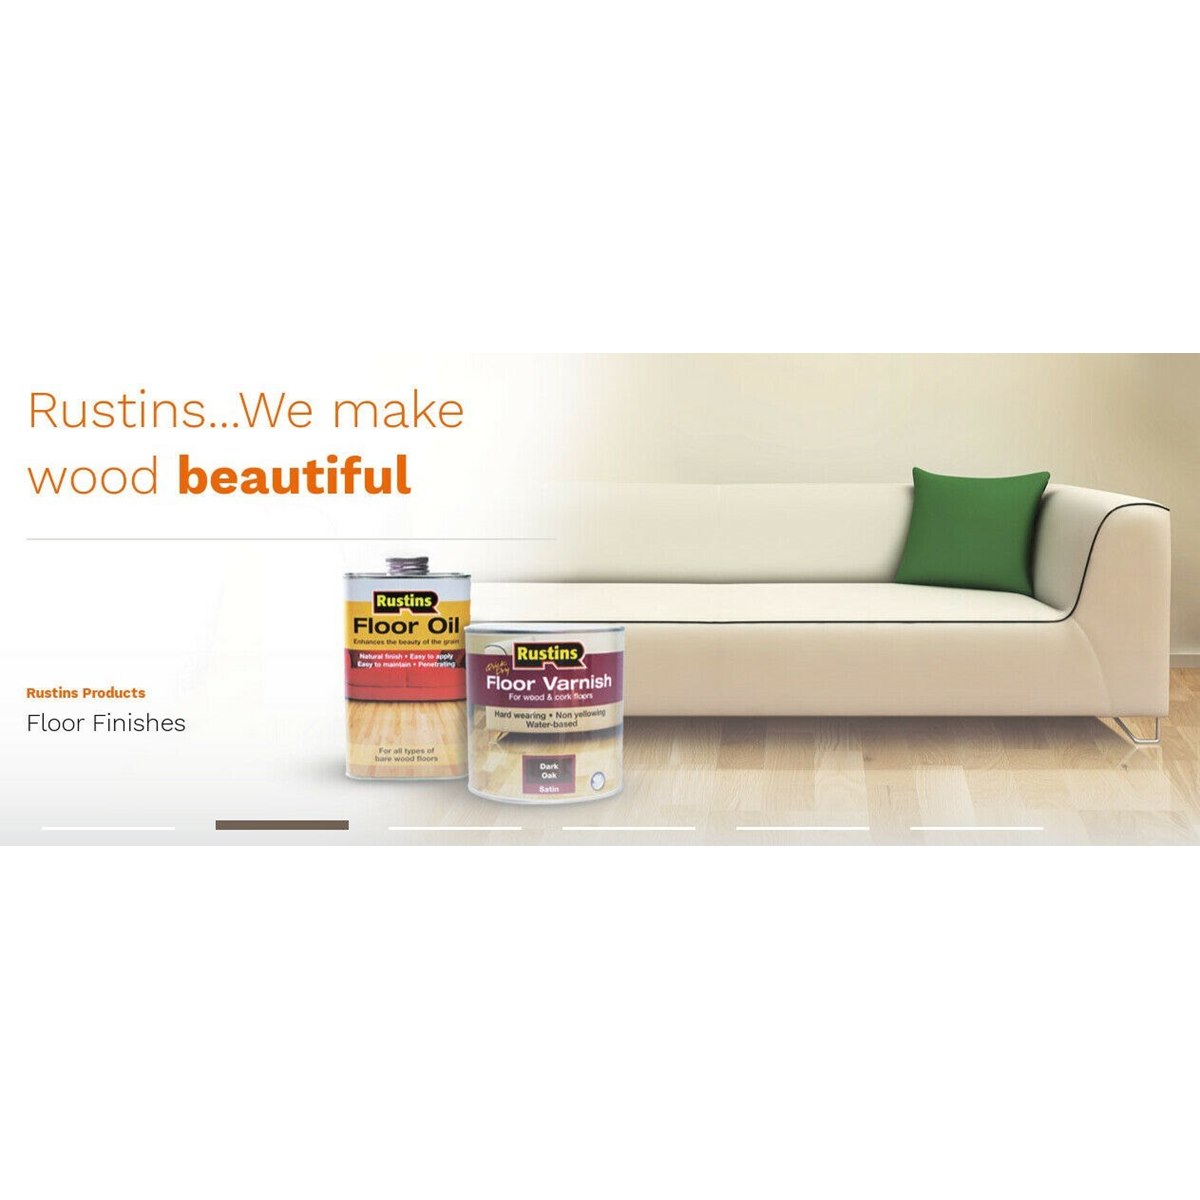 Where to Buy Rustins Wood Floor Varnish